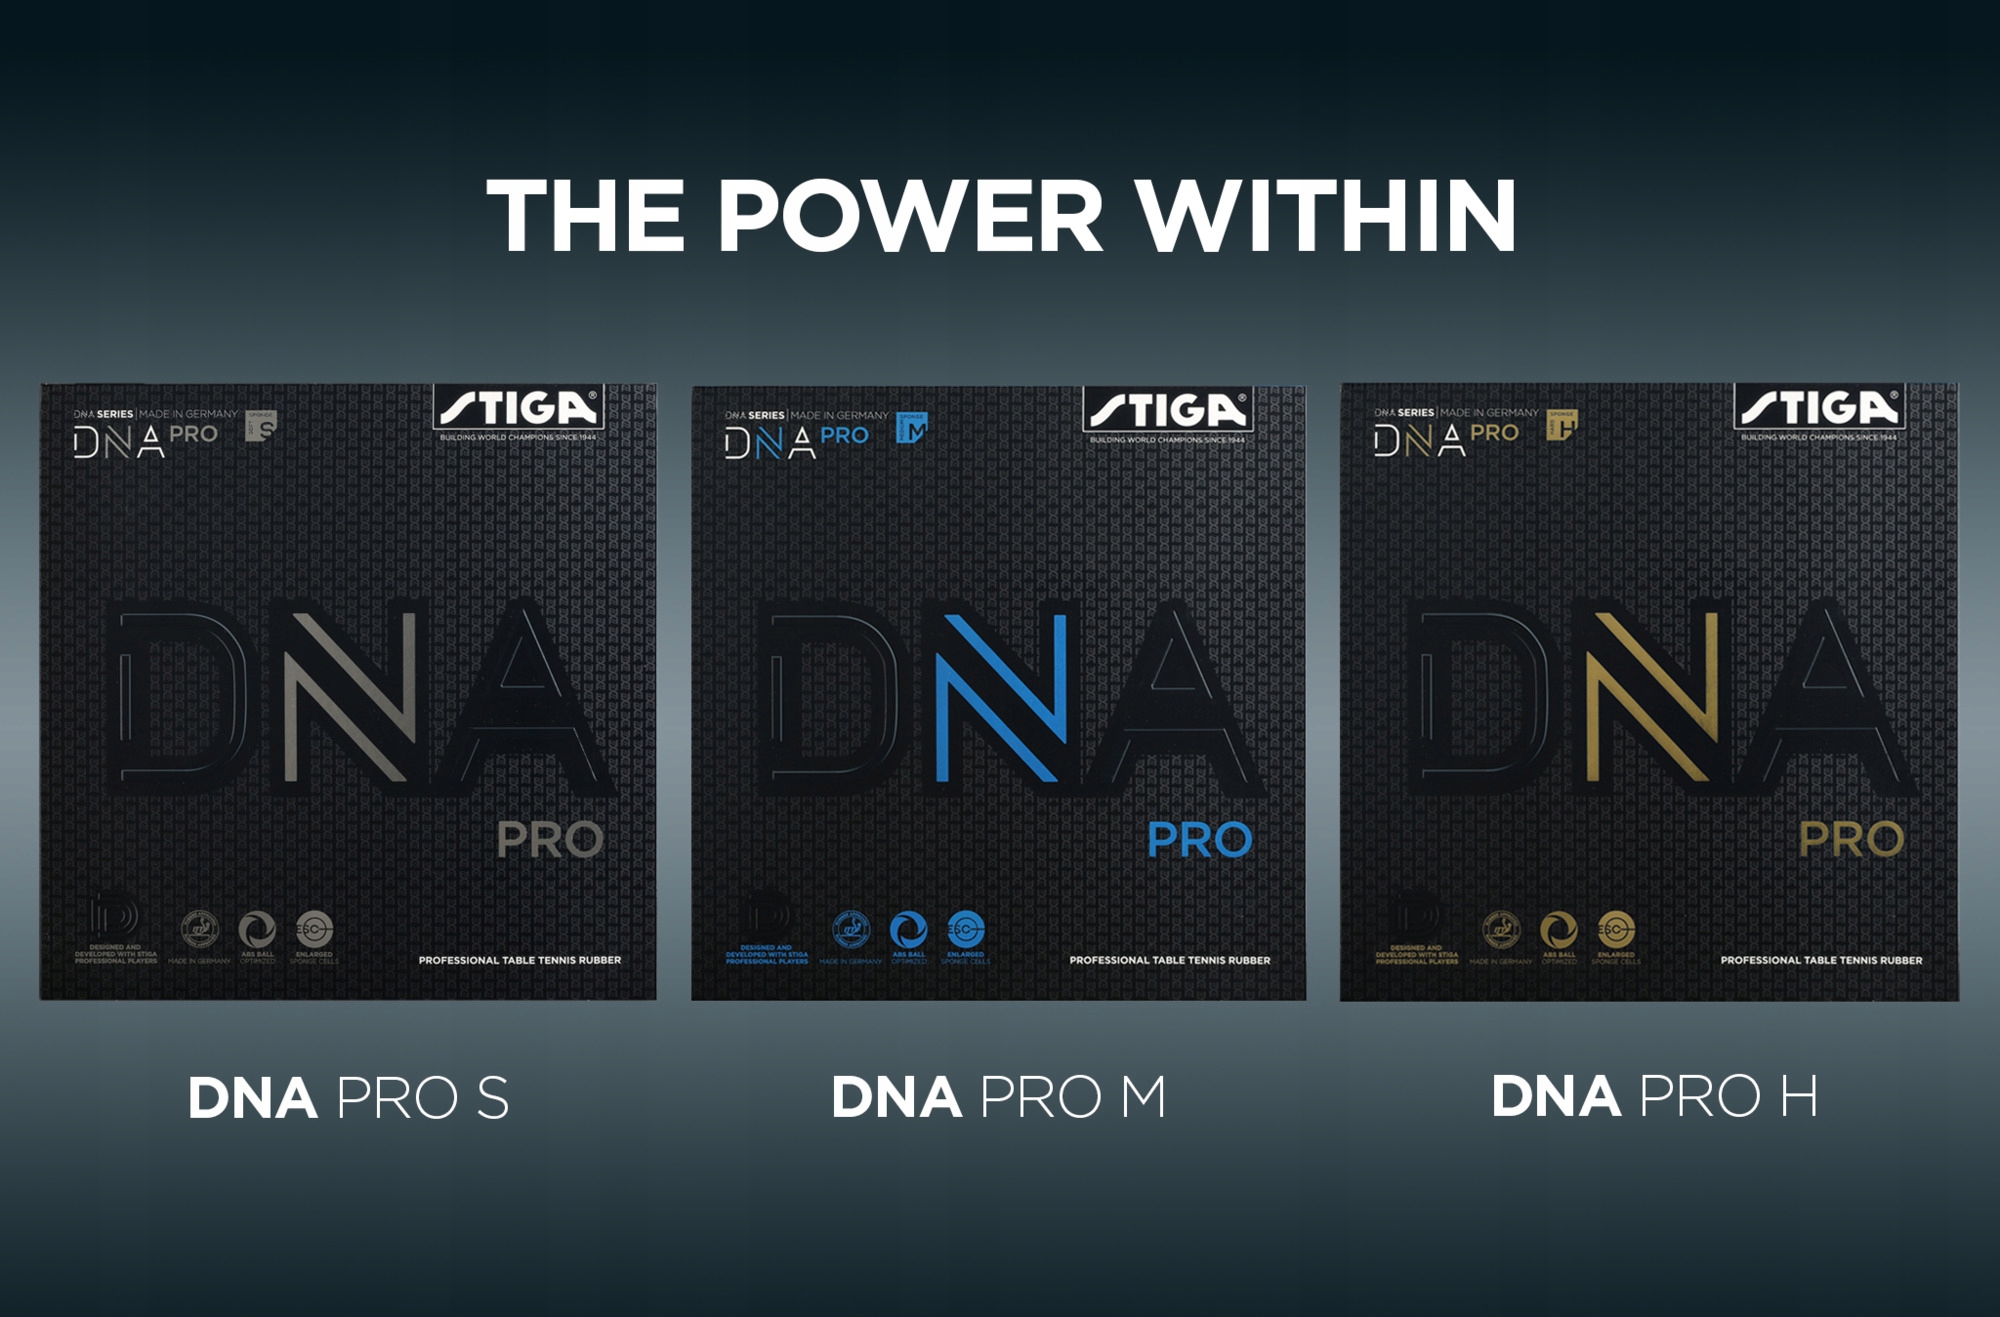 Stiga DNA Pro. Stiga DNA Pro h. Stiga DNA Future m analoger. Накладка Stiga DNA Pro s.